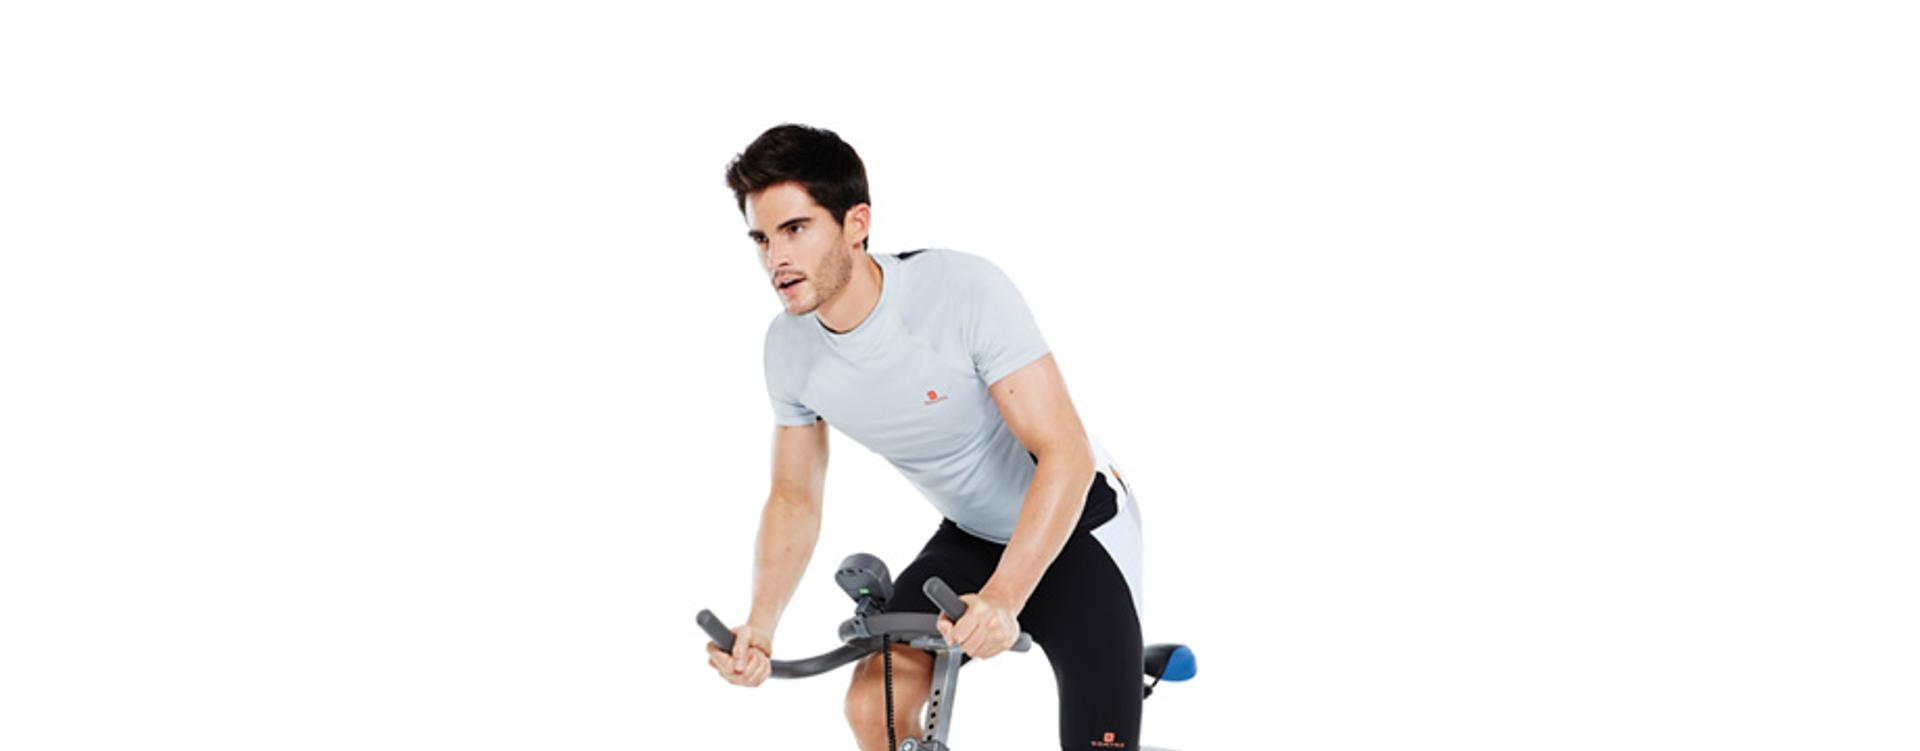 fitzine-cardio-training-astuce-progresser-en-endurance-header